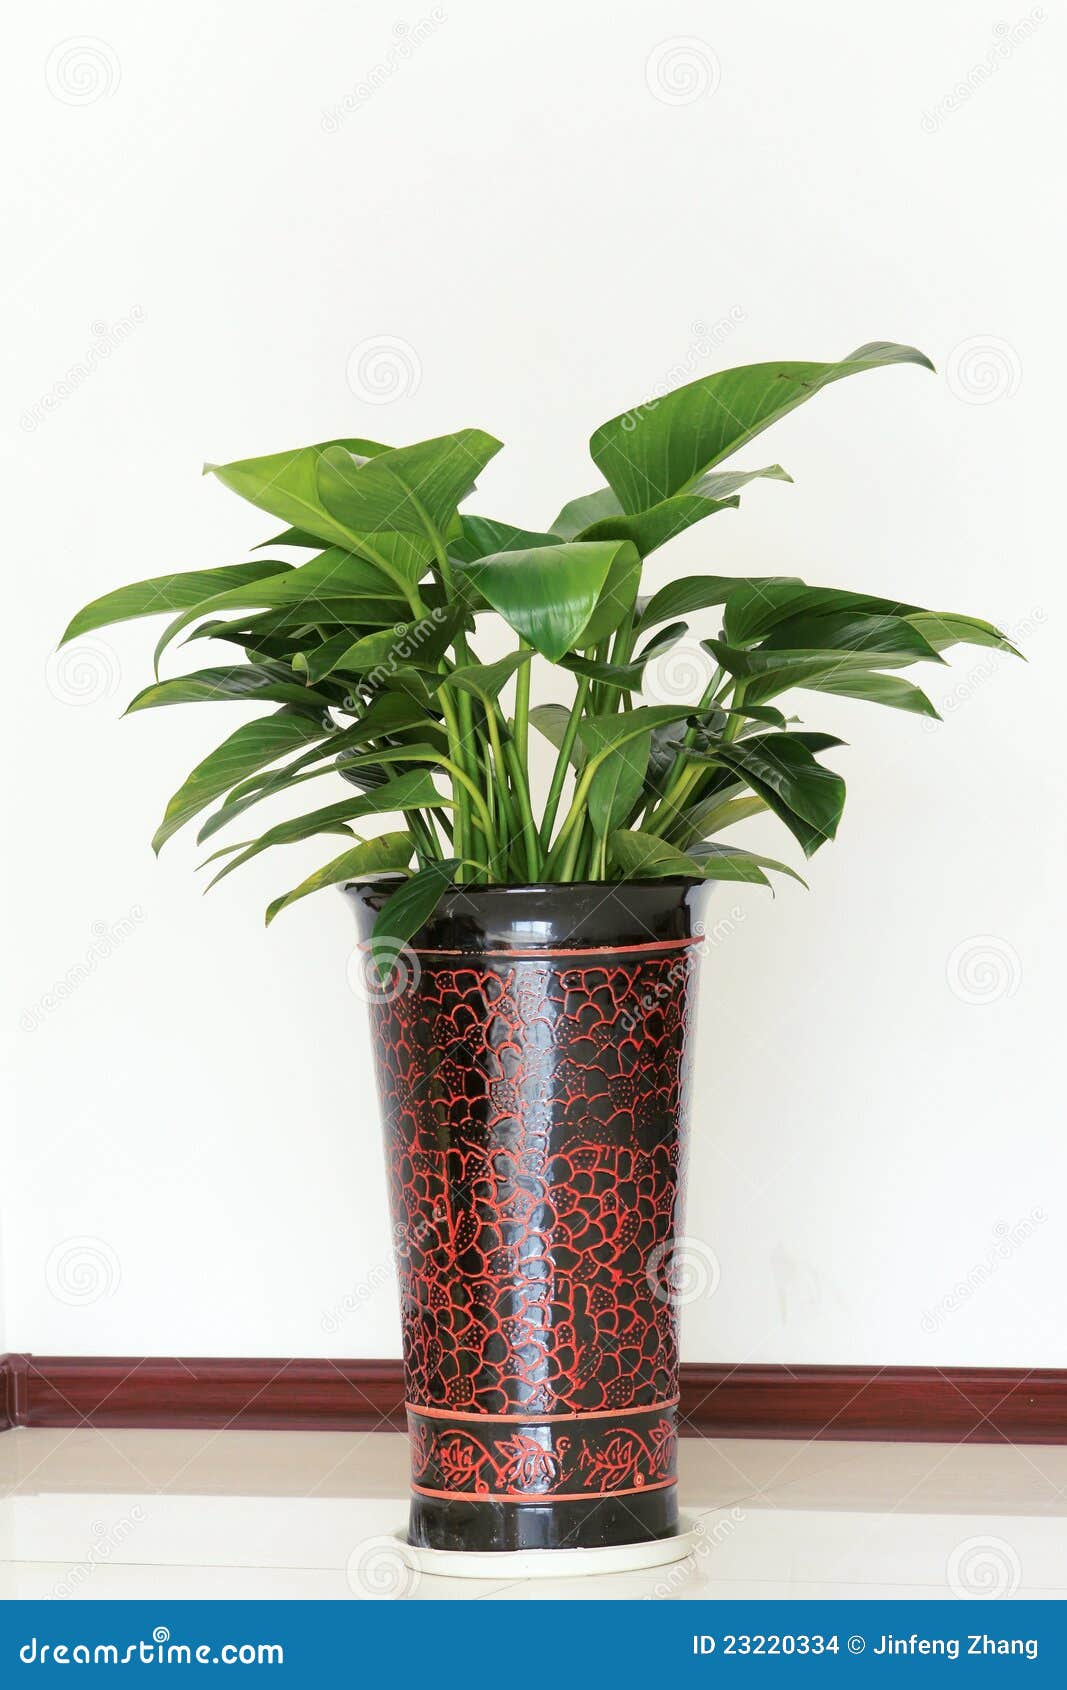 Indoor ornamental plants stock photo. Image of gardening